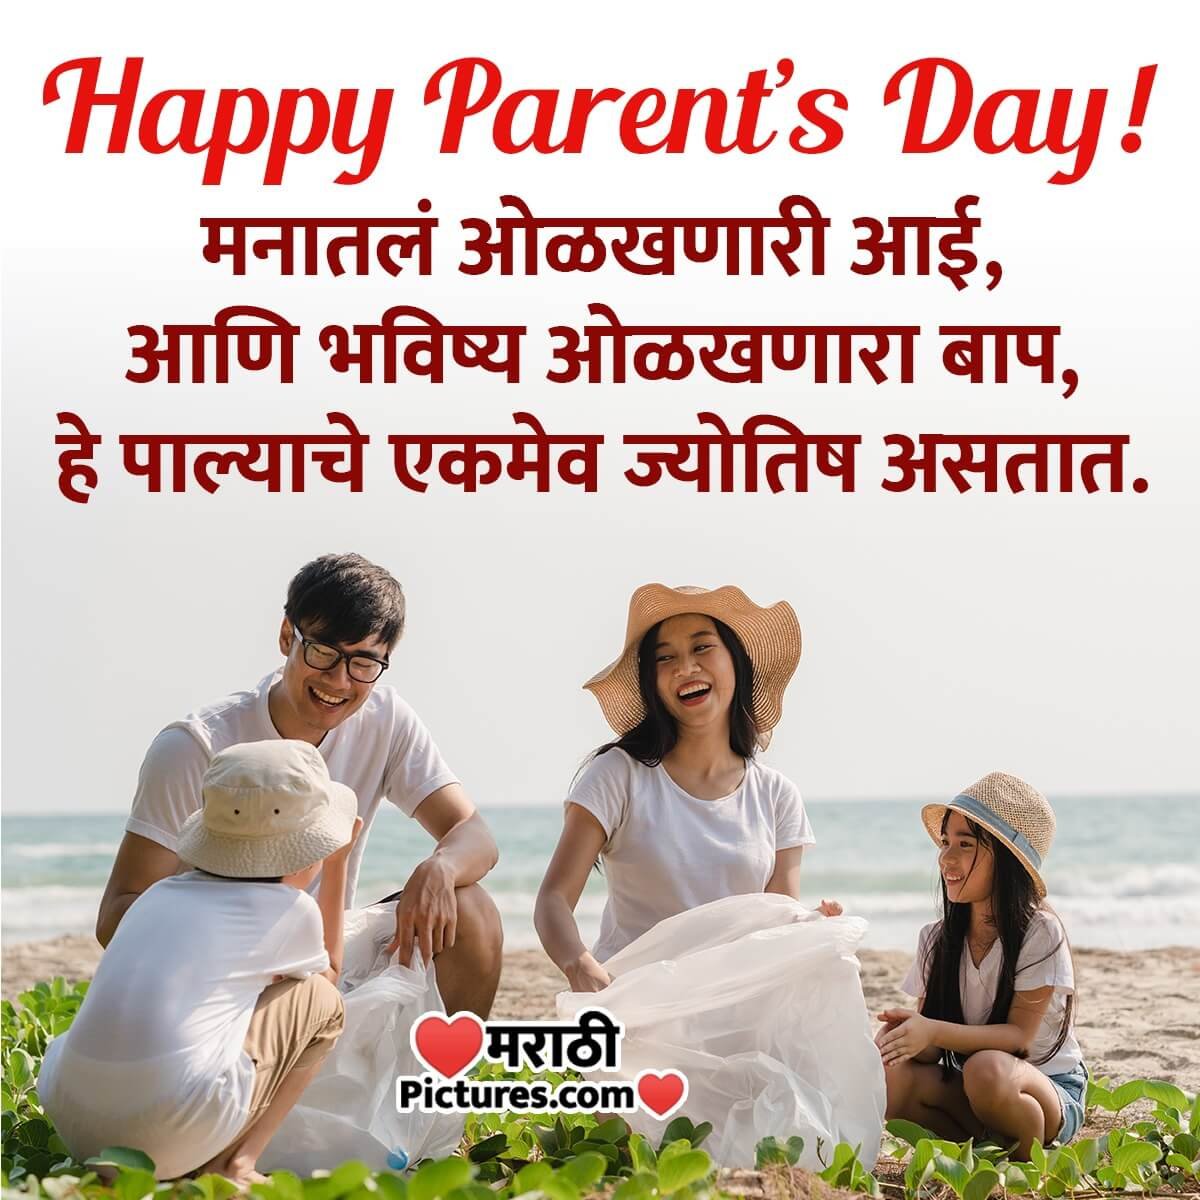 Happy Parents Day Image In Marathi